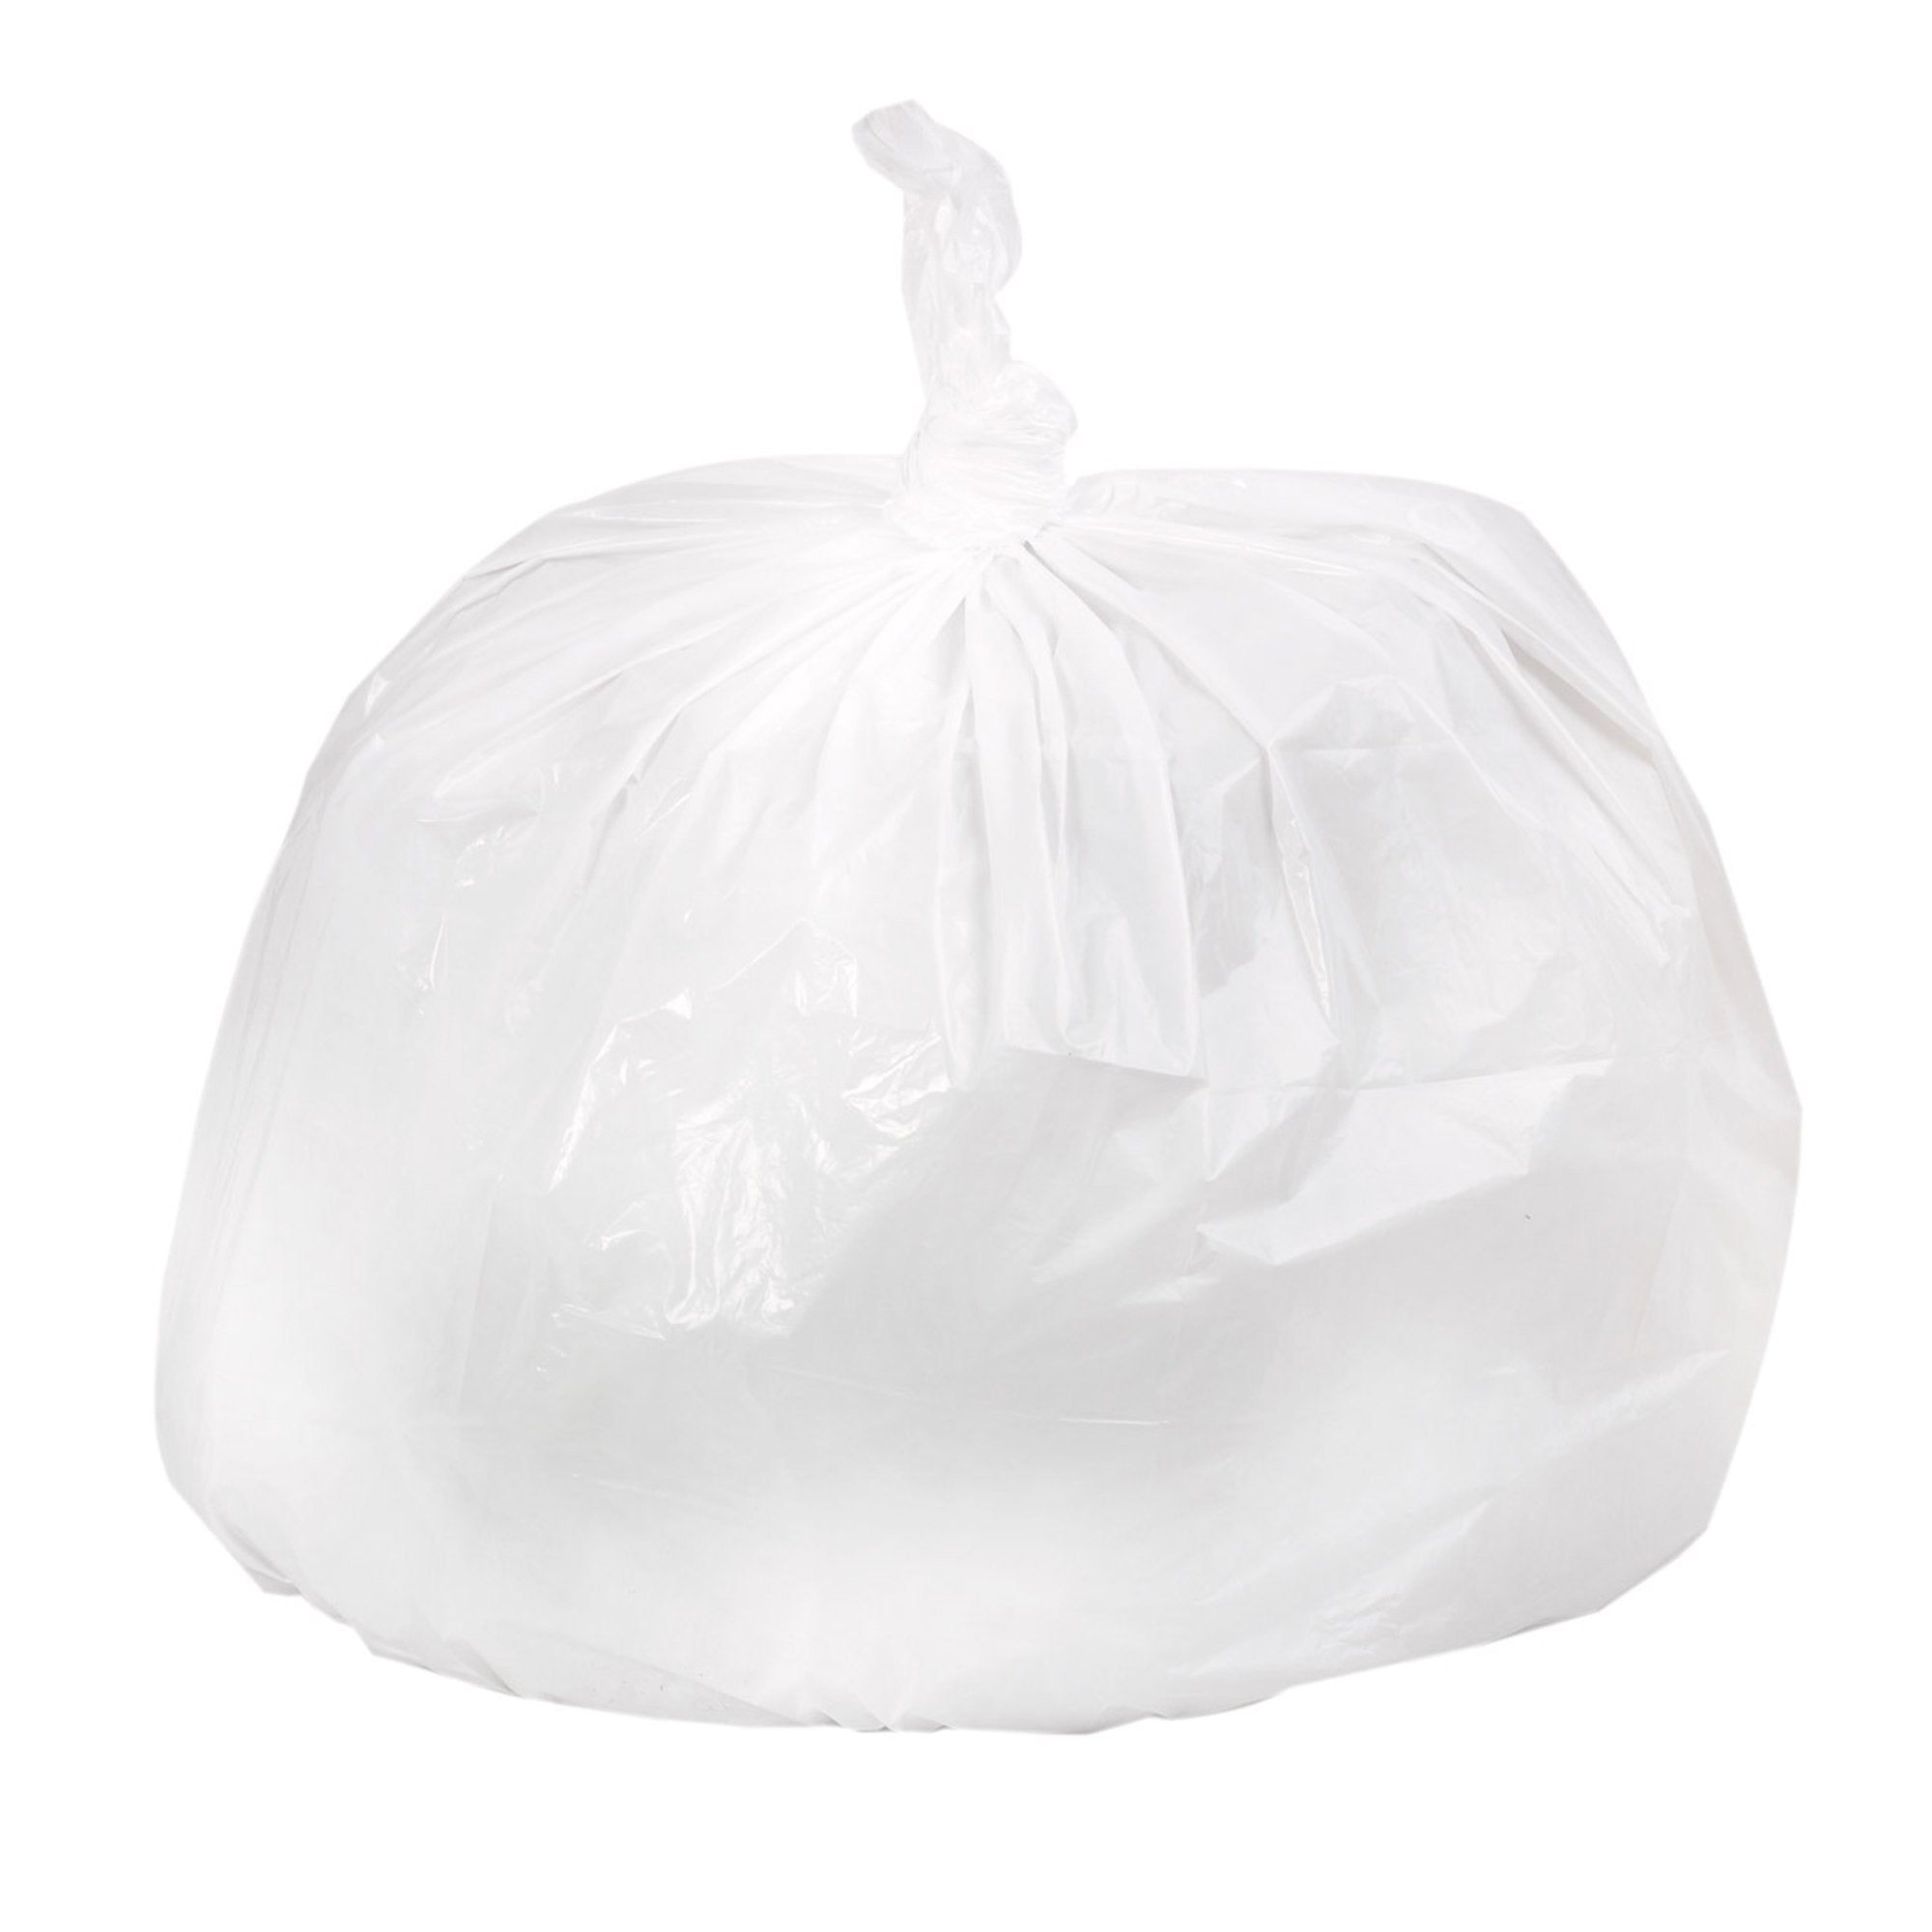 Colonial Bag Extra Heavy Duty Tuff Trash Bag, White, 33 gal. -Case of 150